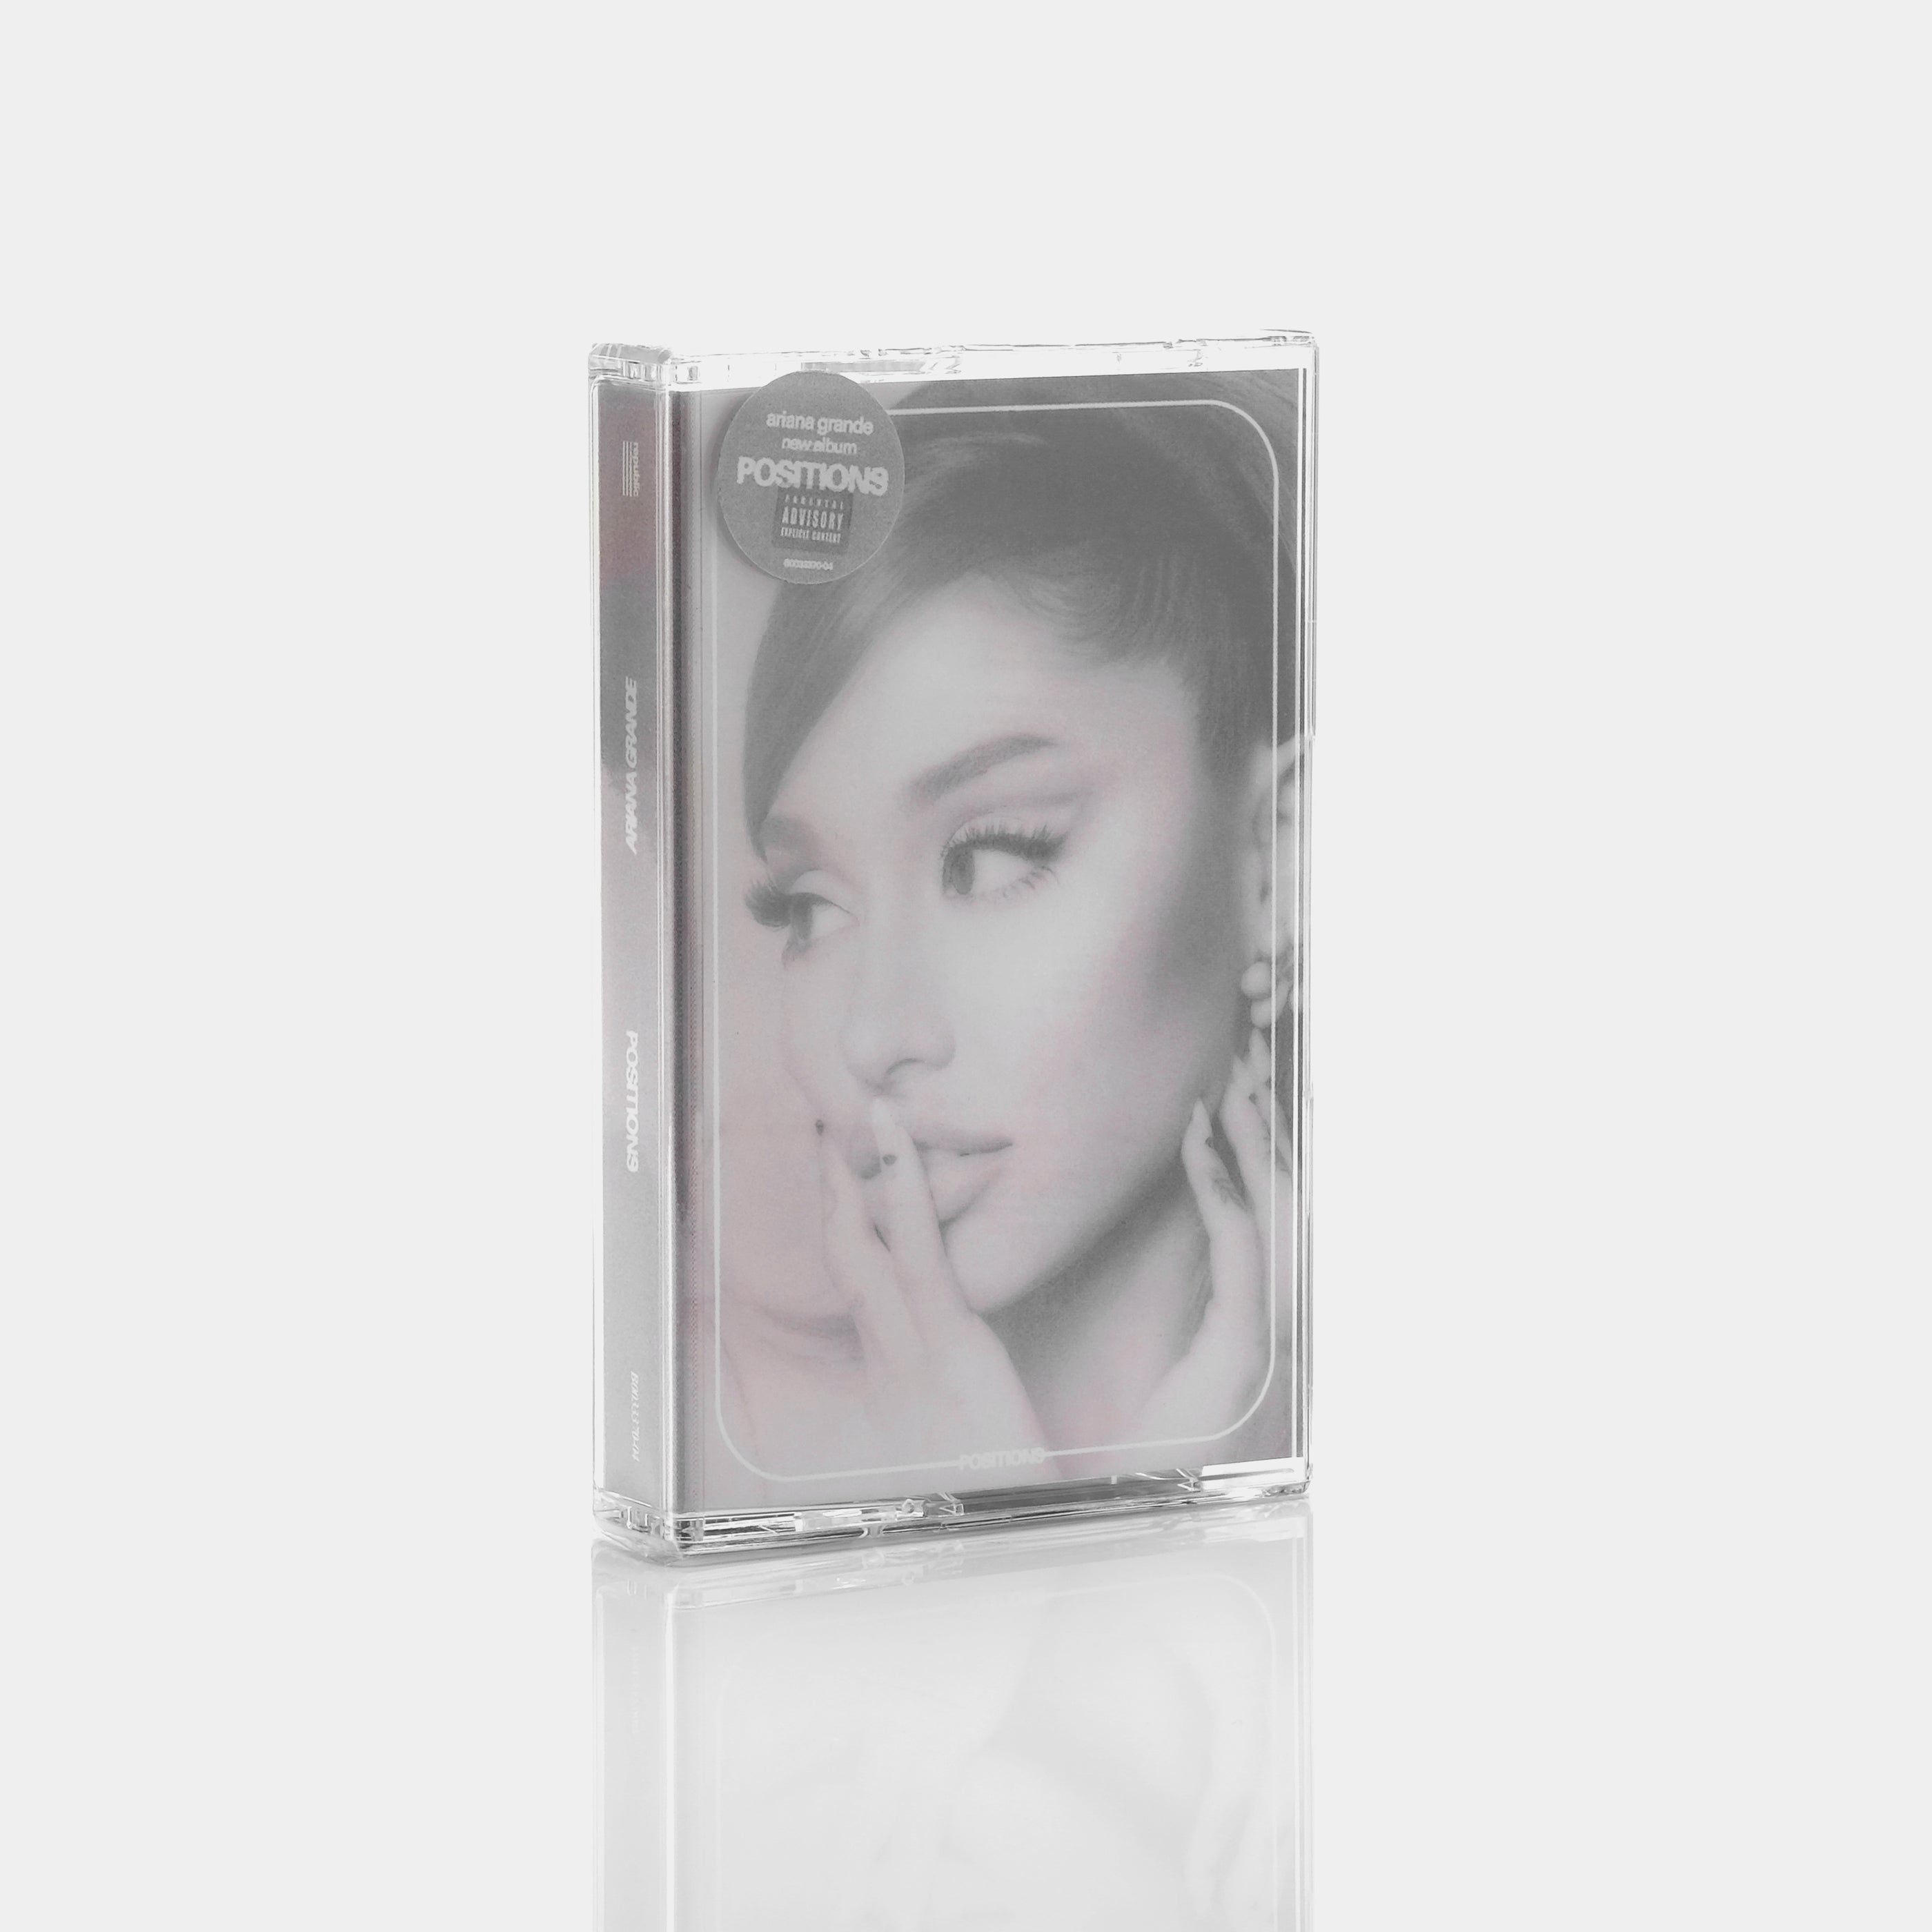 Ariana Grande - Positions Cassette Tape